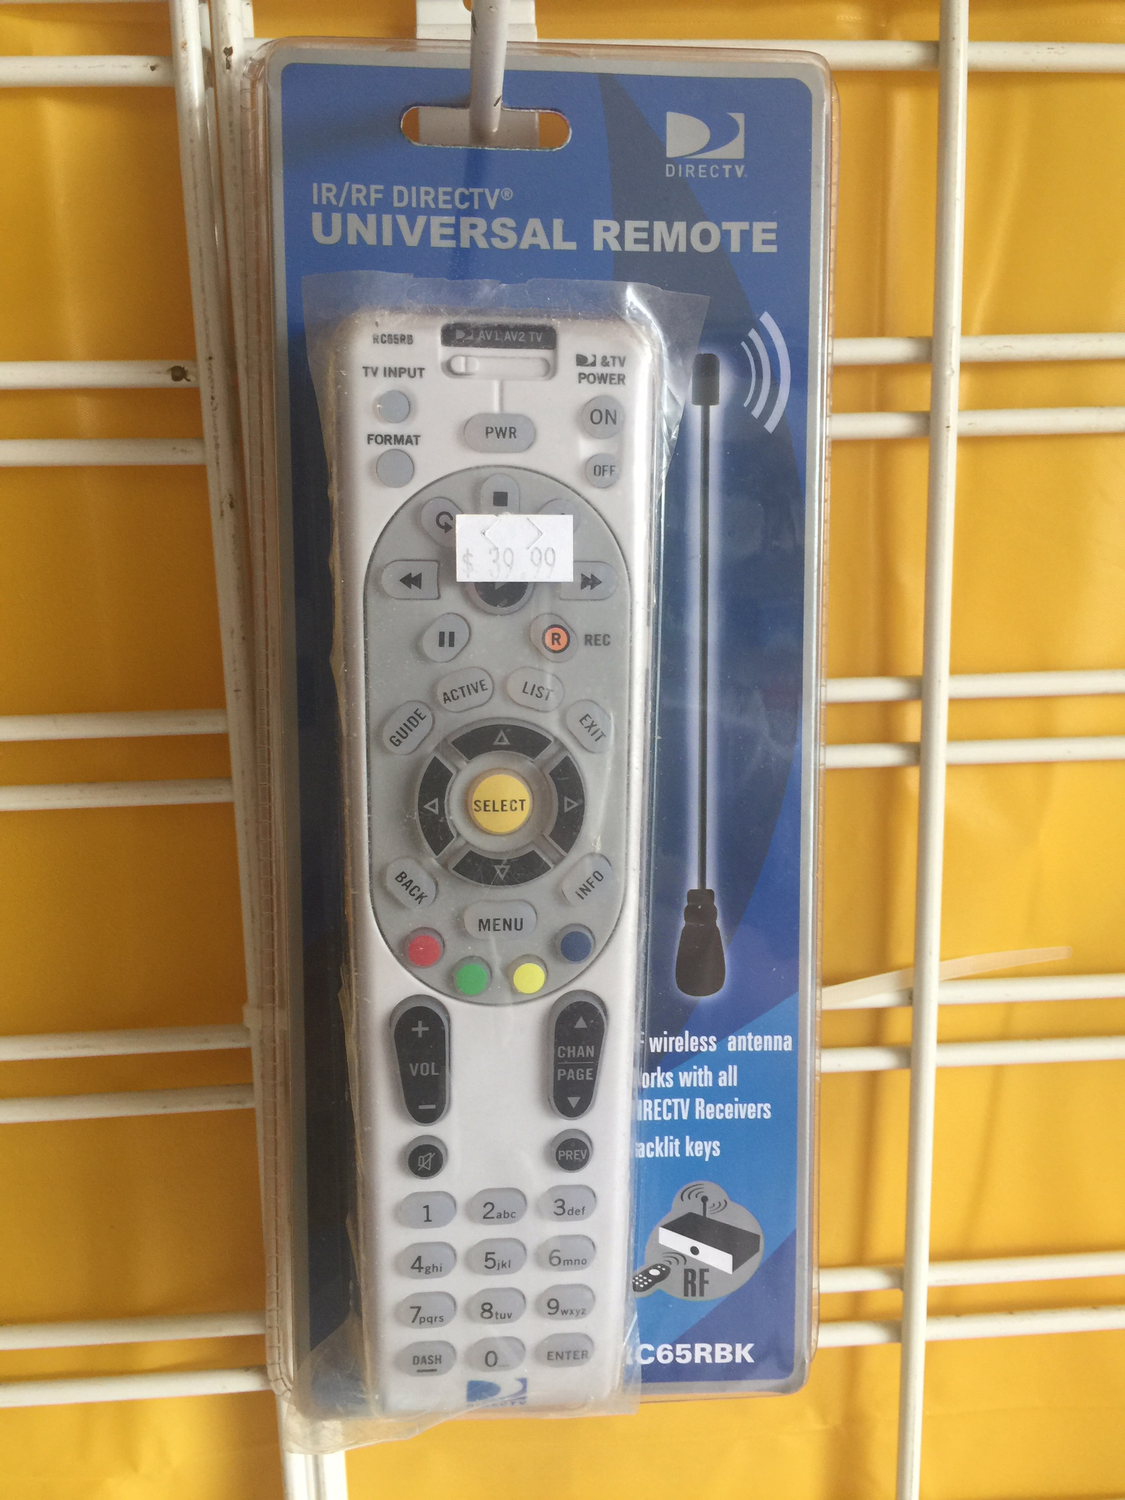 Direct TV universal IR/RF remote